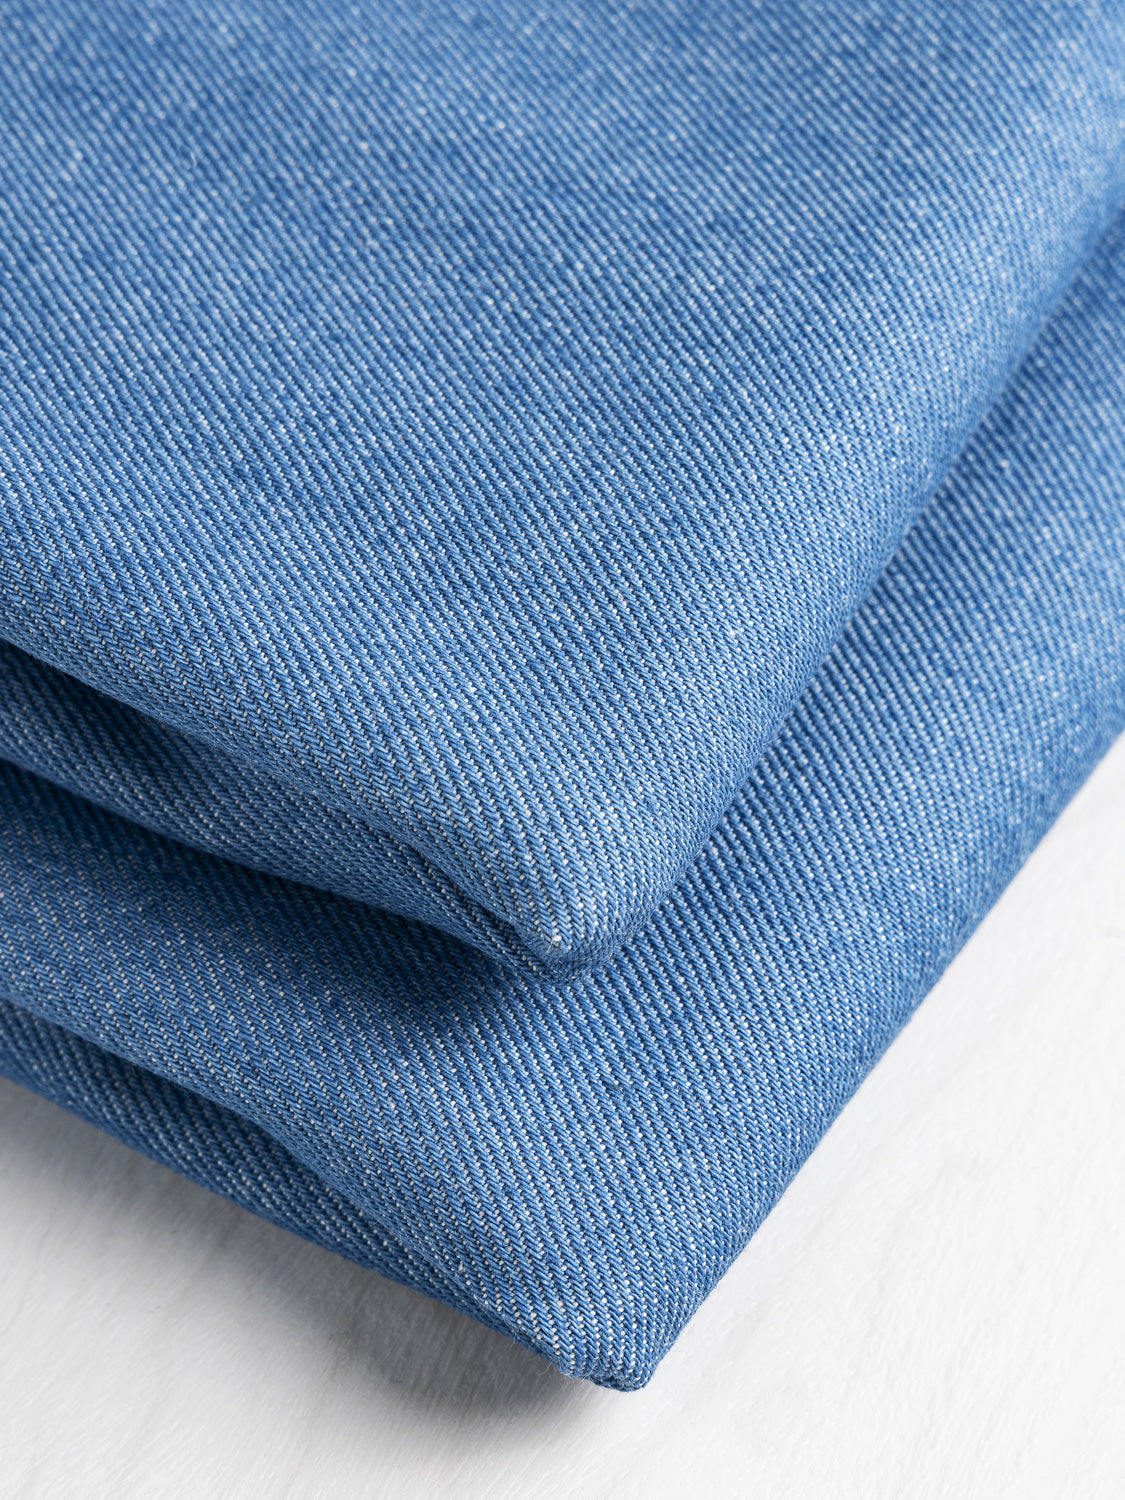 Denim Blue Jean Fabric Squares 12 x 12 Lot of 10 Cut 100% Cotton